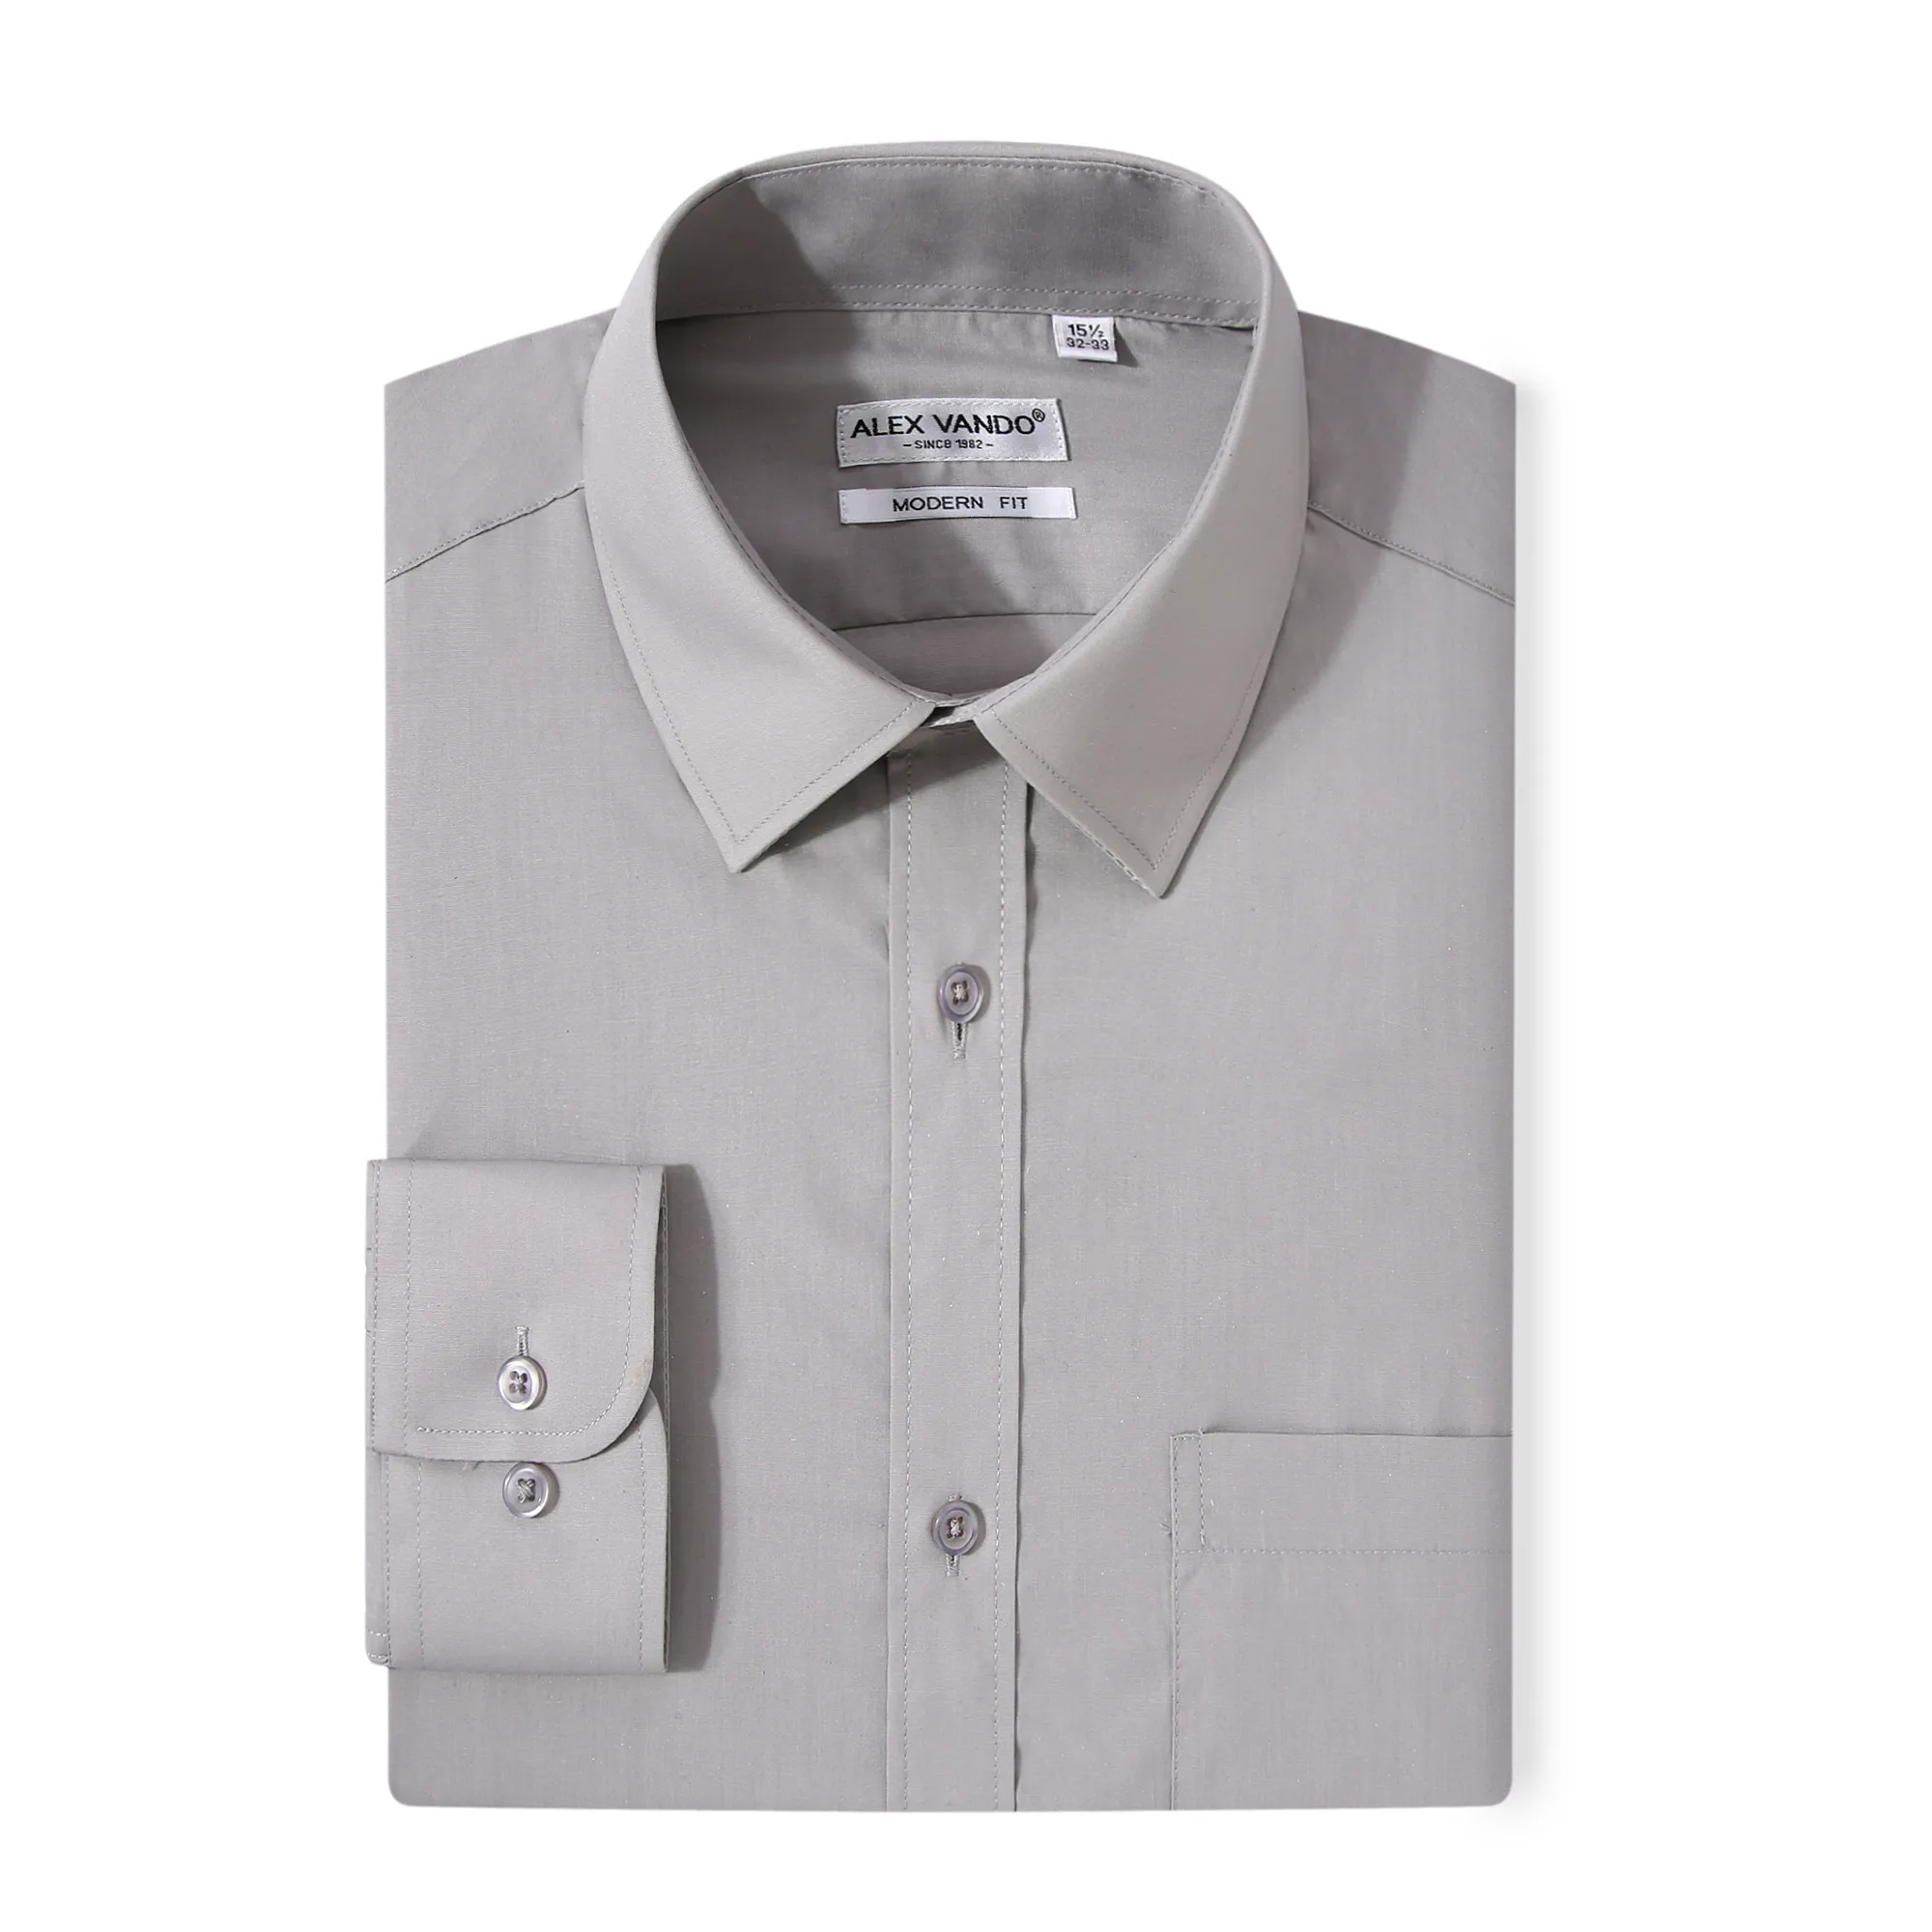 ODMOEM camisas hombre modernas plain dress shirts long sleeve business formal tie custom wholesale men's cotton casual shirts